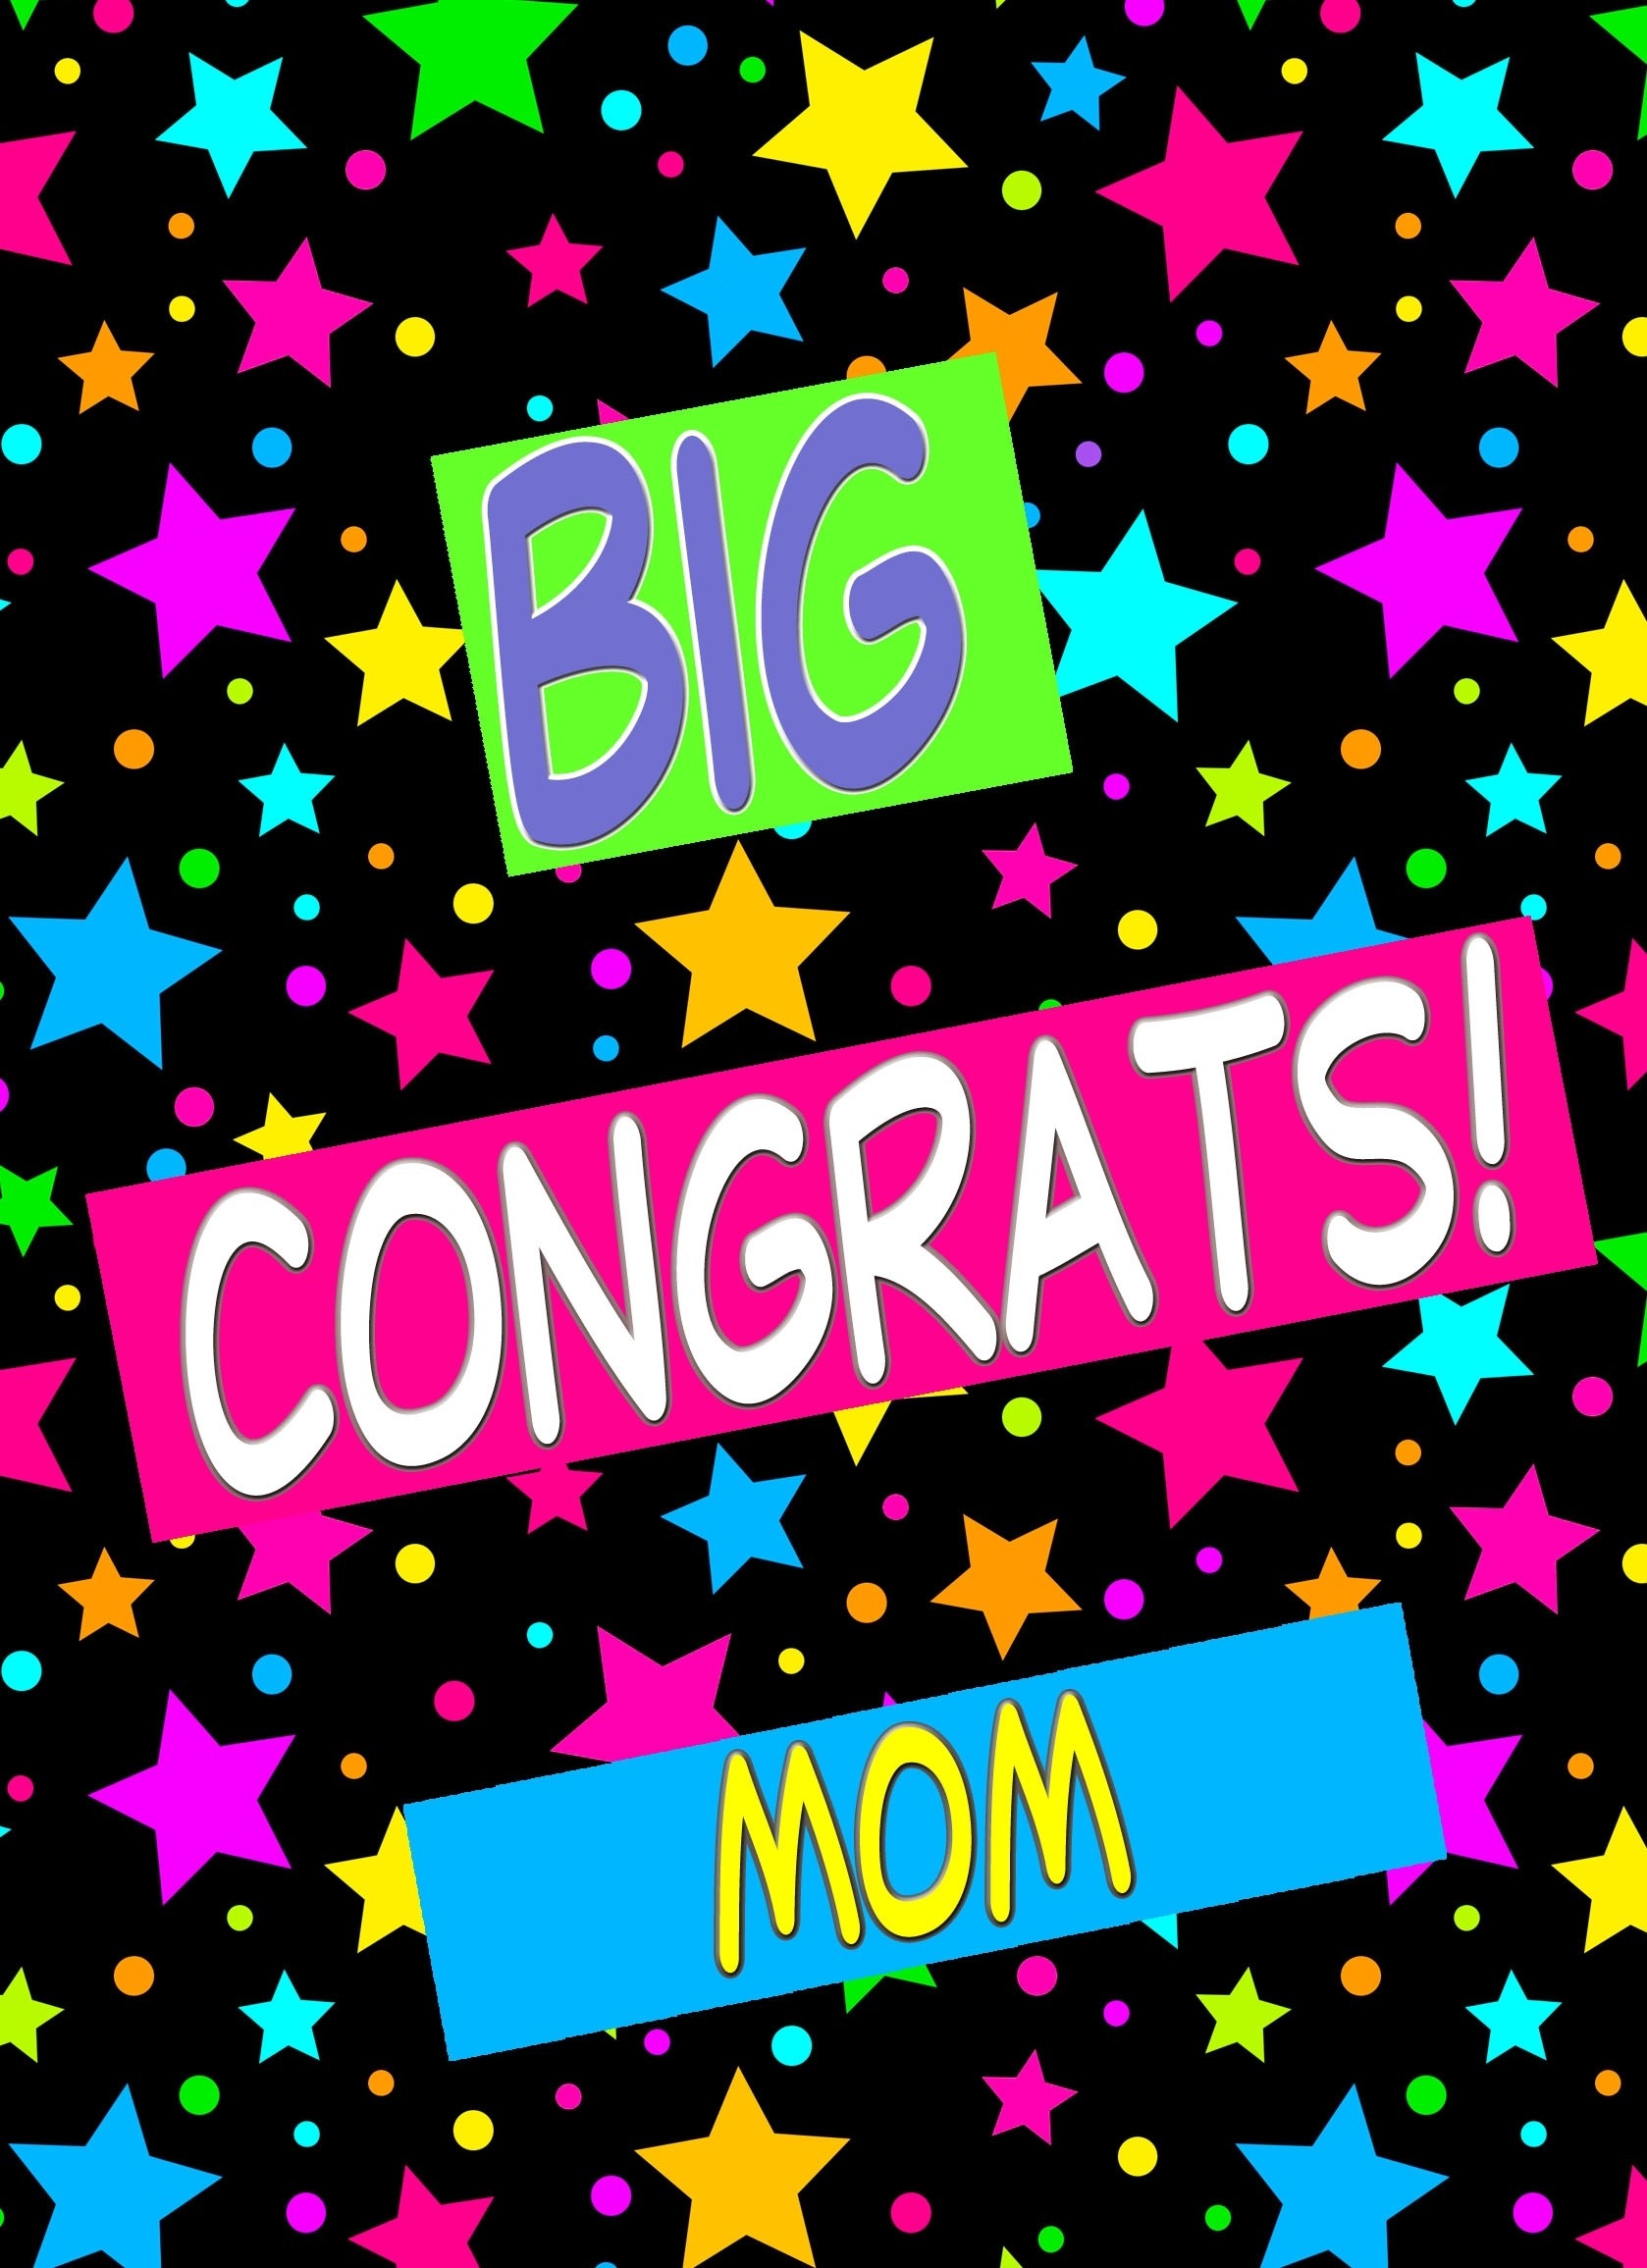 Congratulations Card For Mom (Stars)